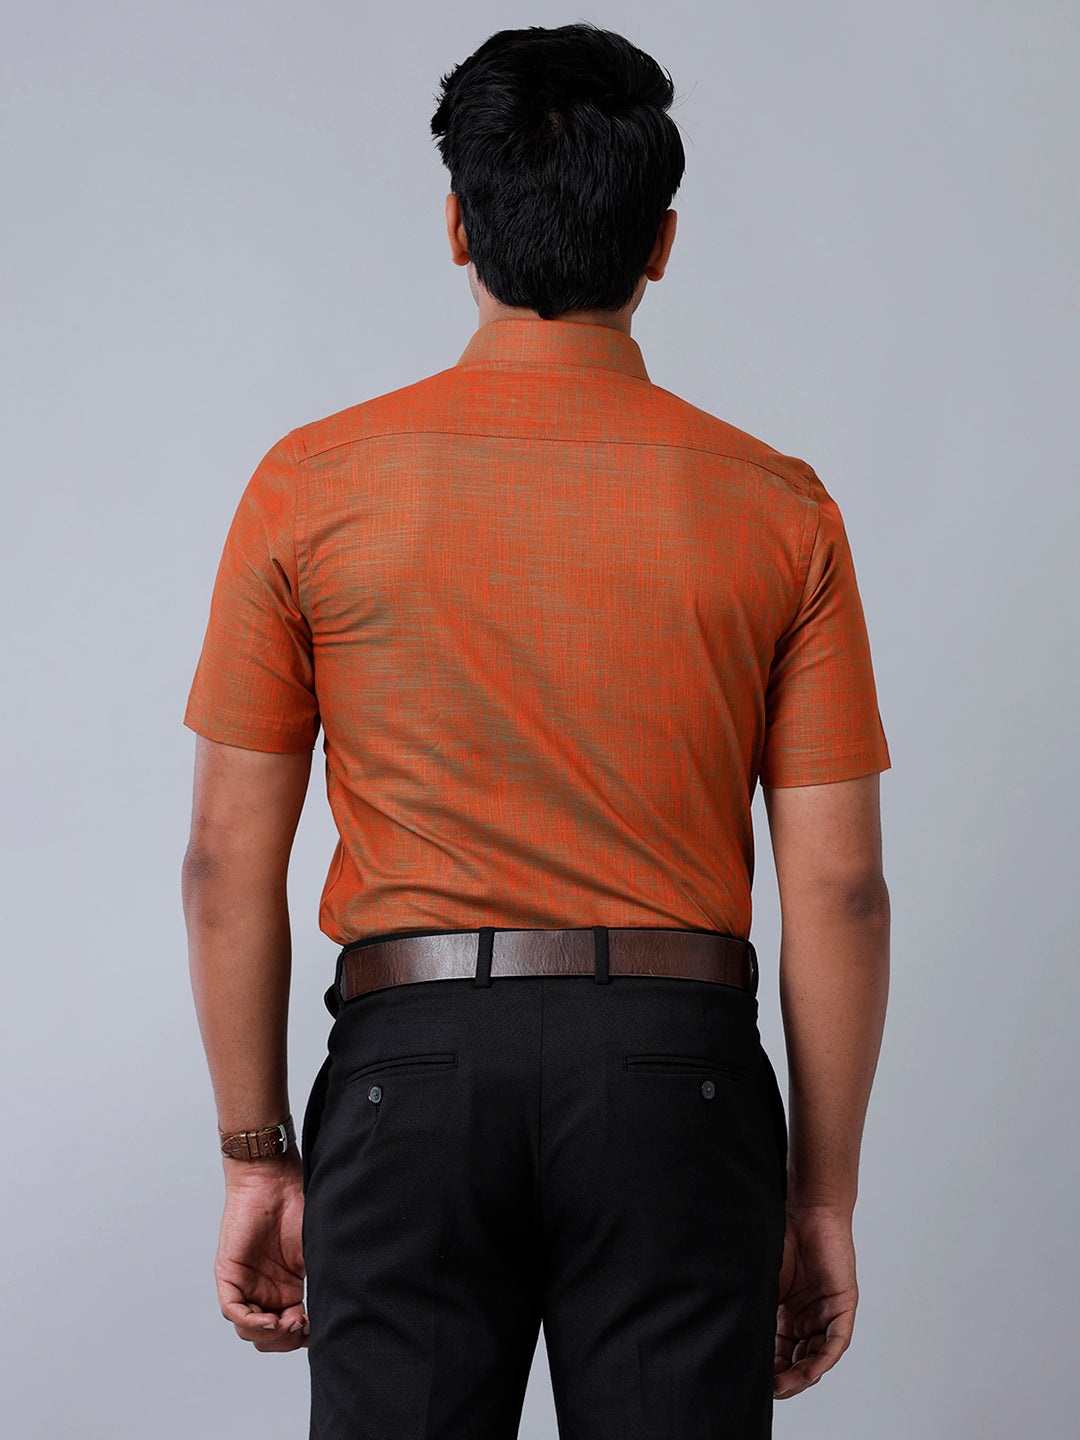 Mens Formal Shirt Half Sleeves Reddish Brown CL2 GT30-Back view